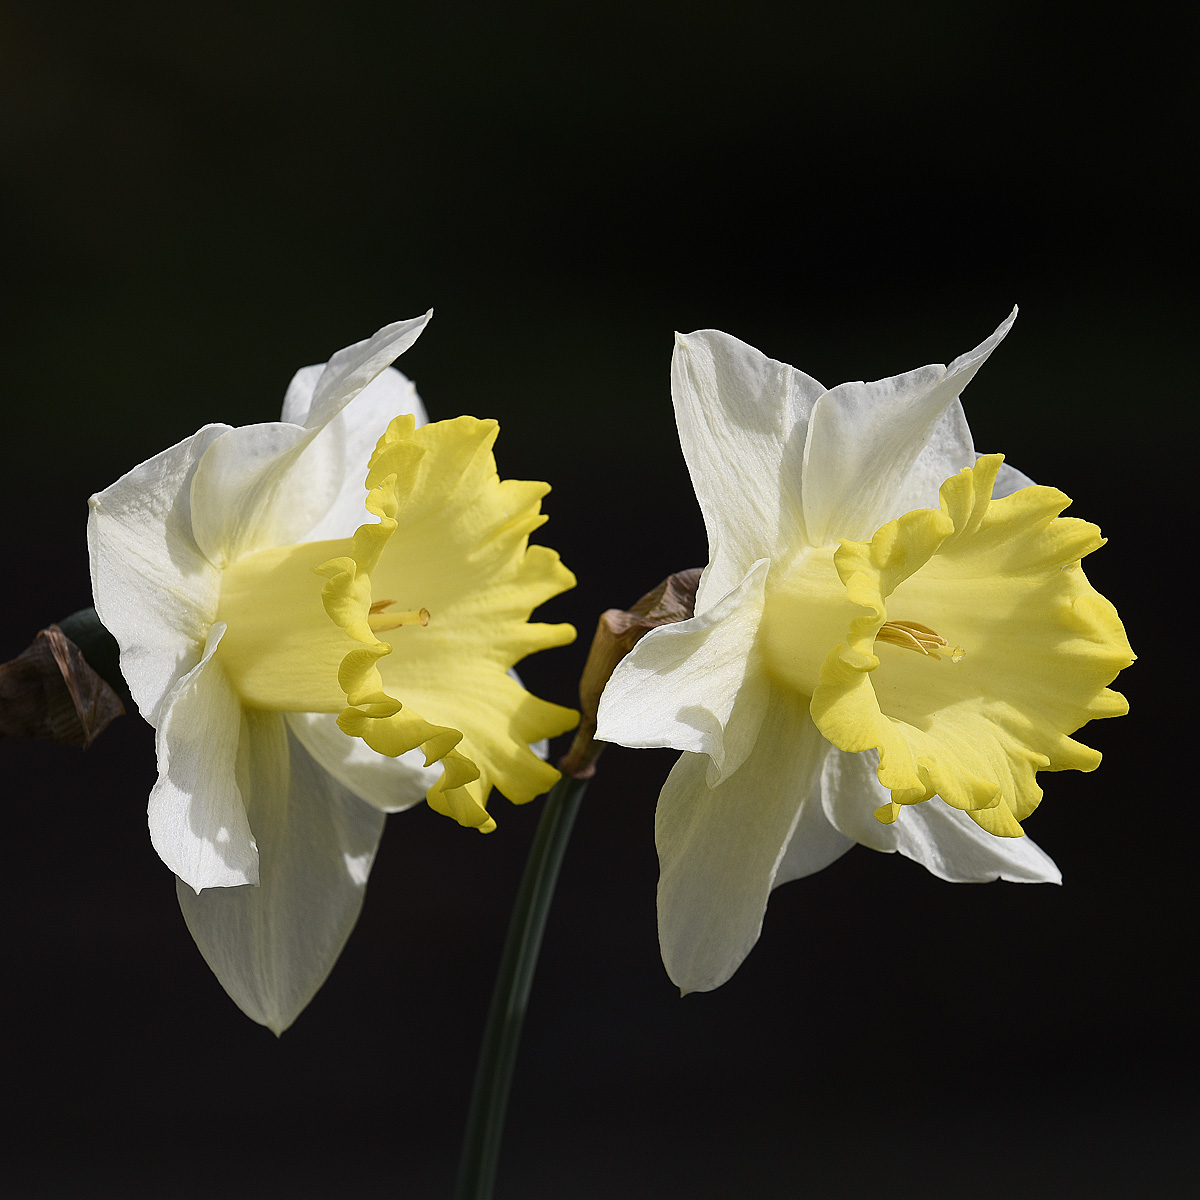 daffodils in the garden...